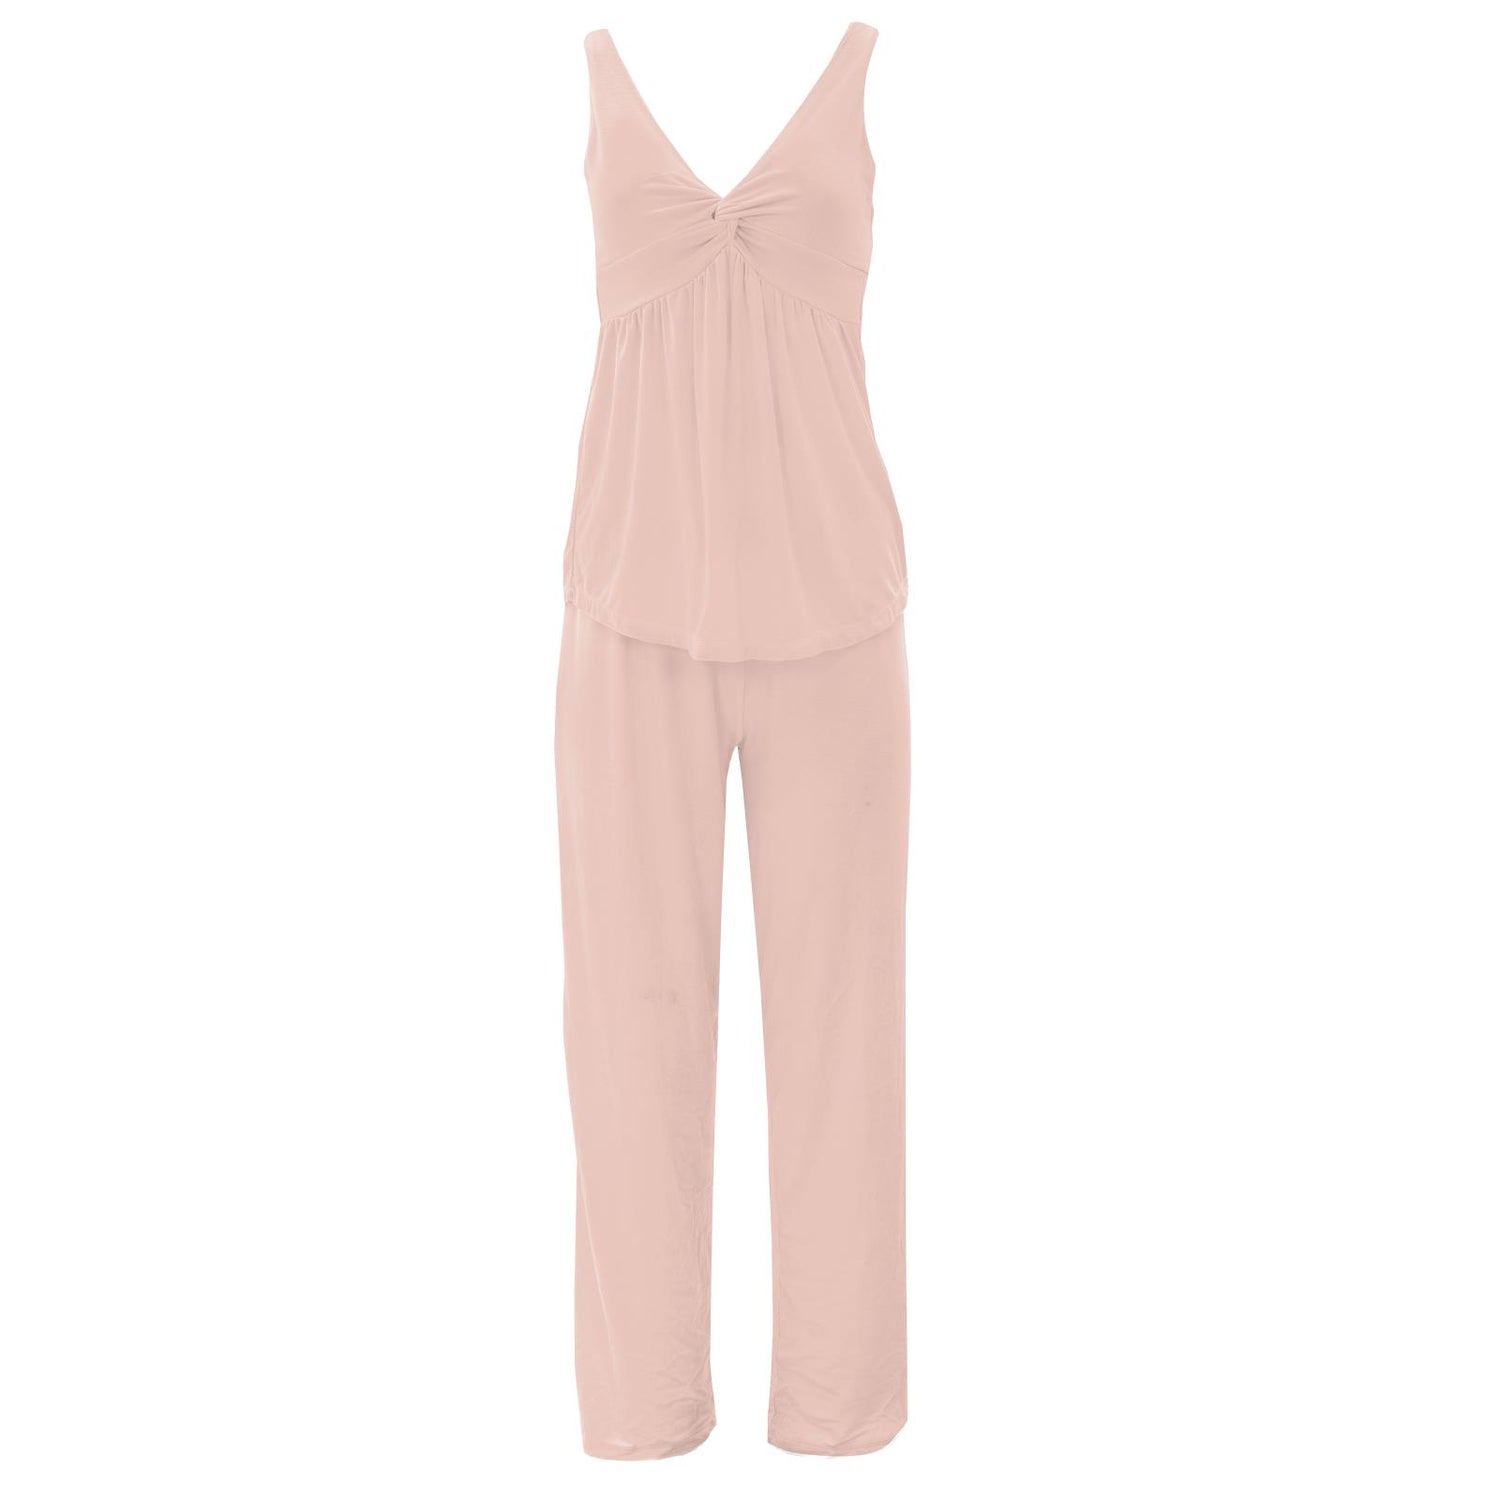 Women's Twist Tank and Pajama Pants Set in Peach Blossom